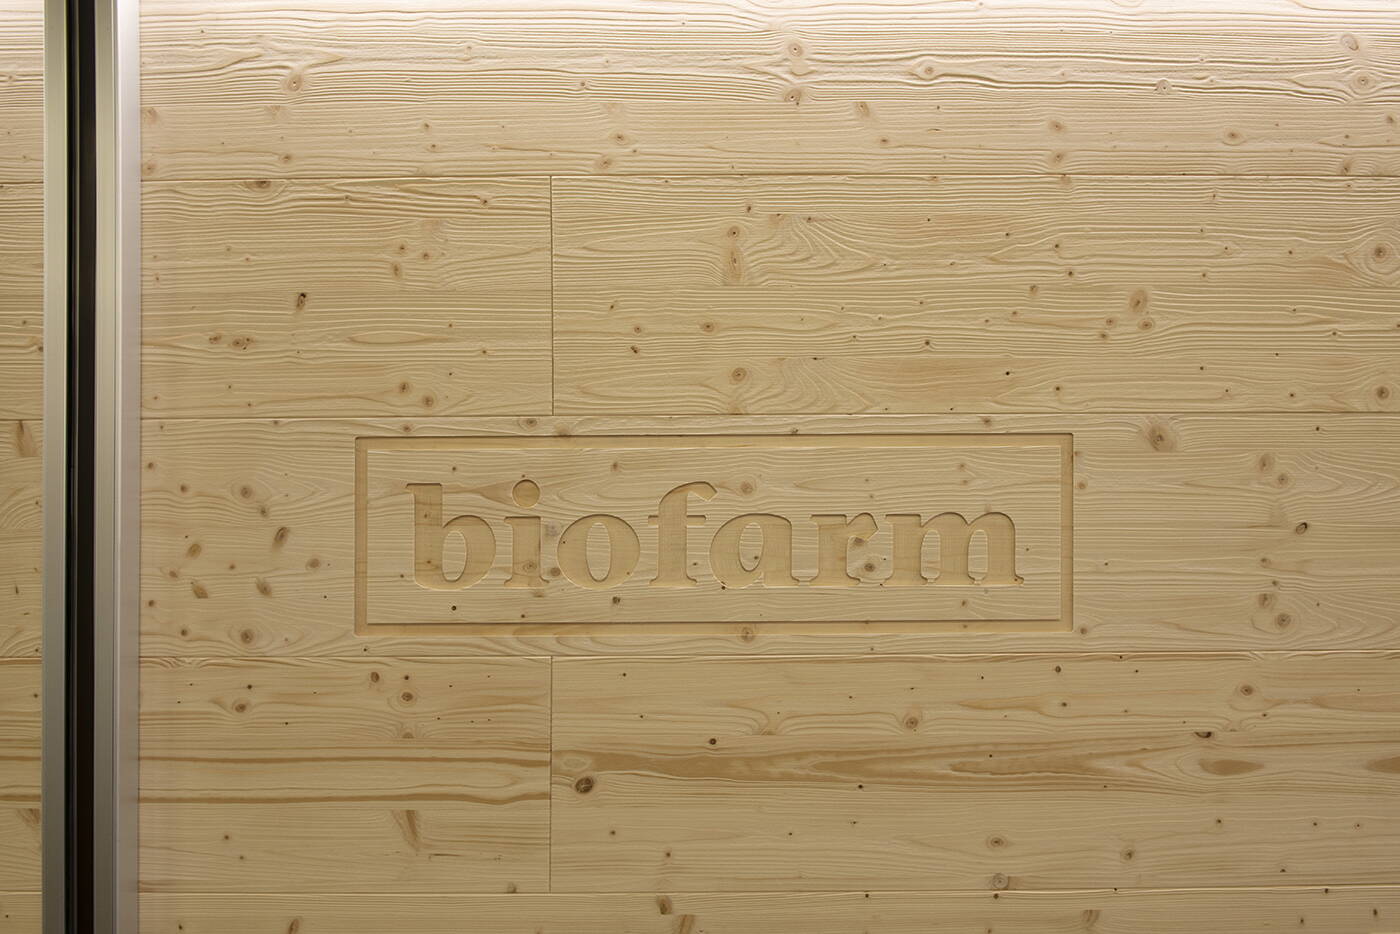 biofarm_kleindietwil_logo.jpg